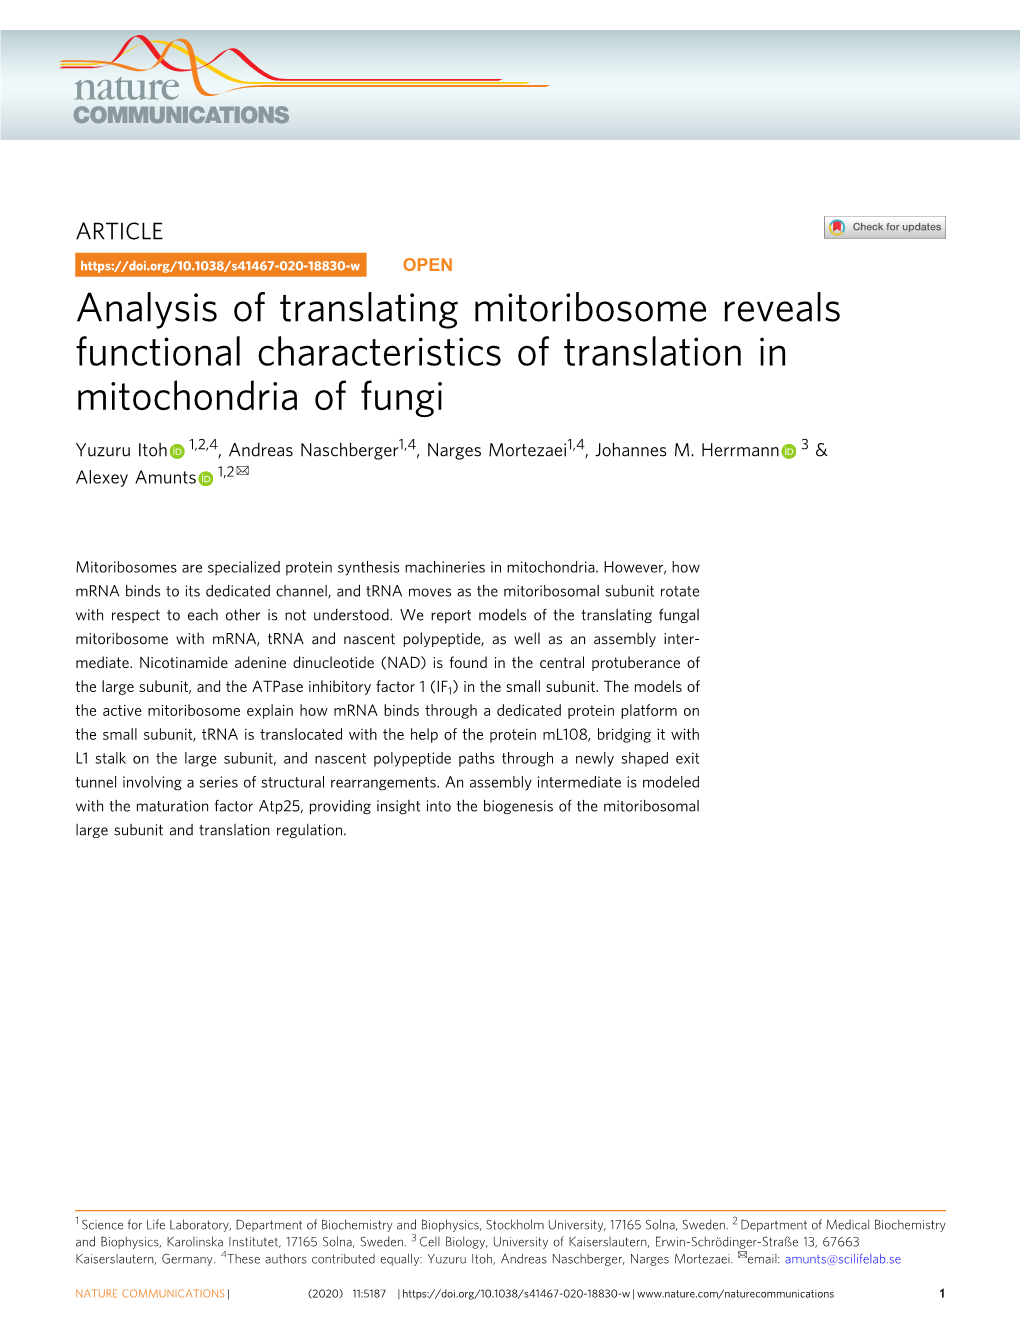 Analysis of Translating Mitoribosome Reveals Functional Characteristics of Translation in Mitochondria of Fungi